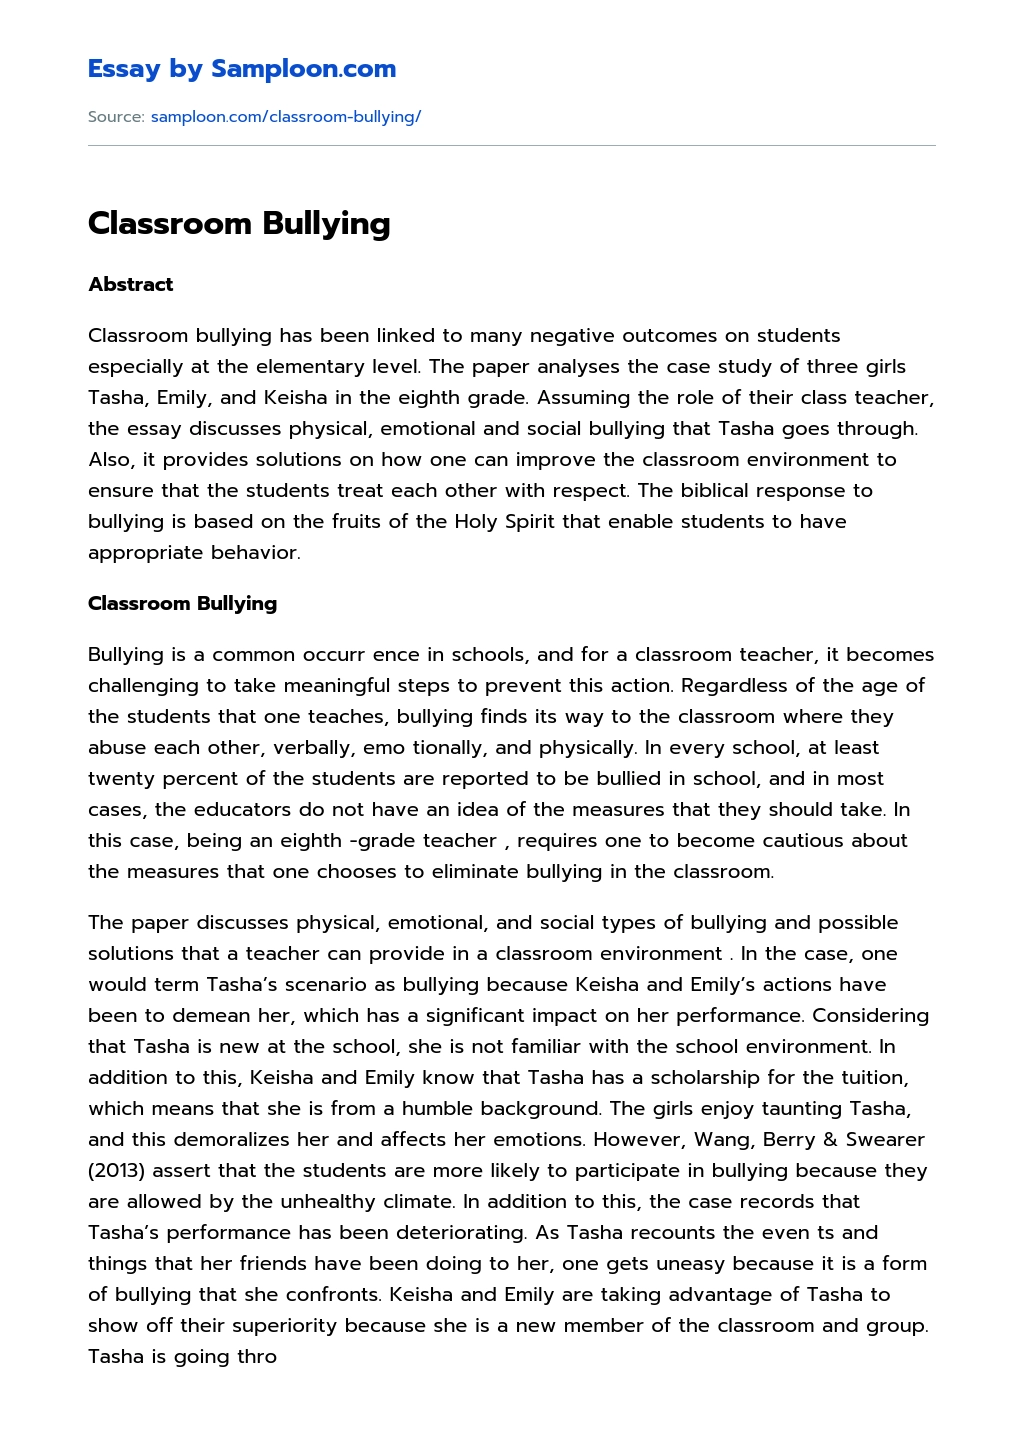 Classroom Bullying essay